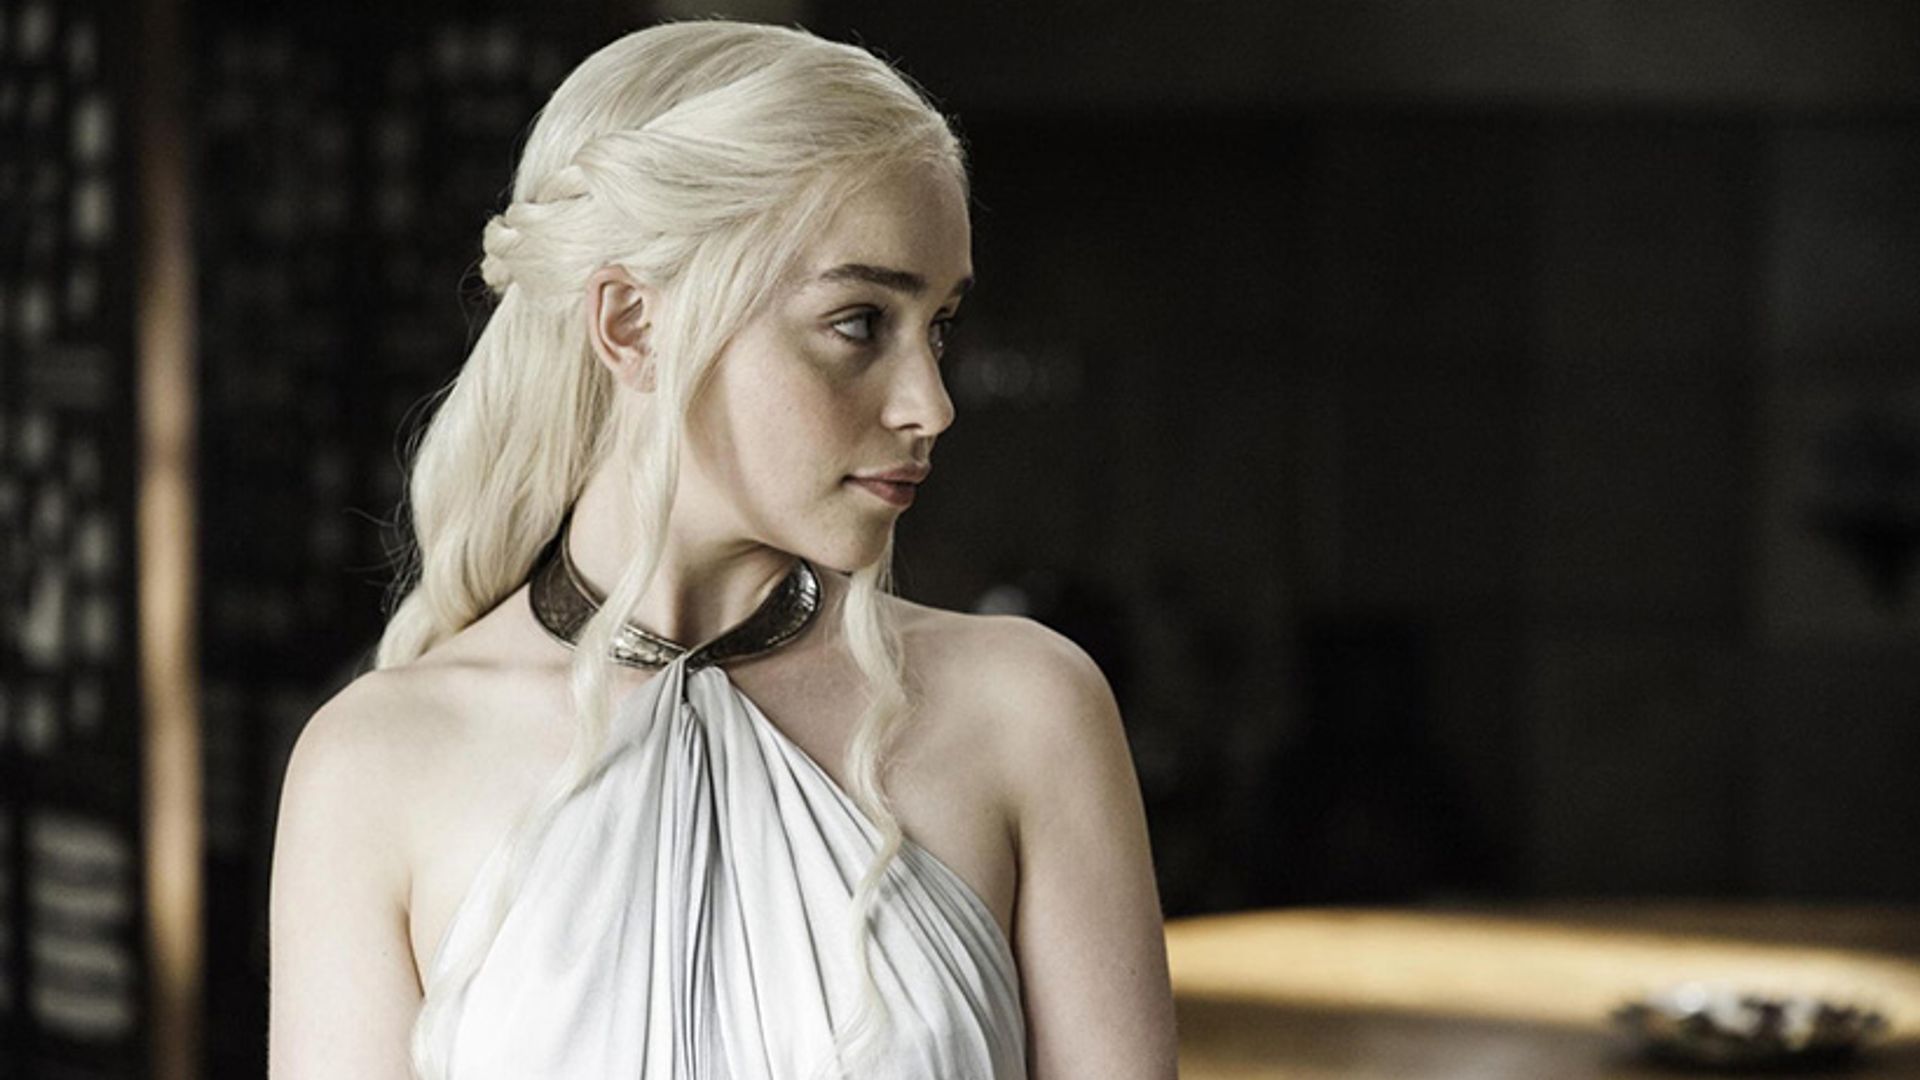 Game of Thrones: How to style your hair like Daenerys Targaryen